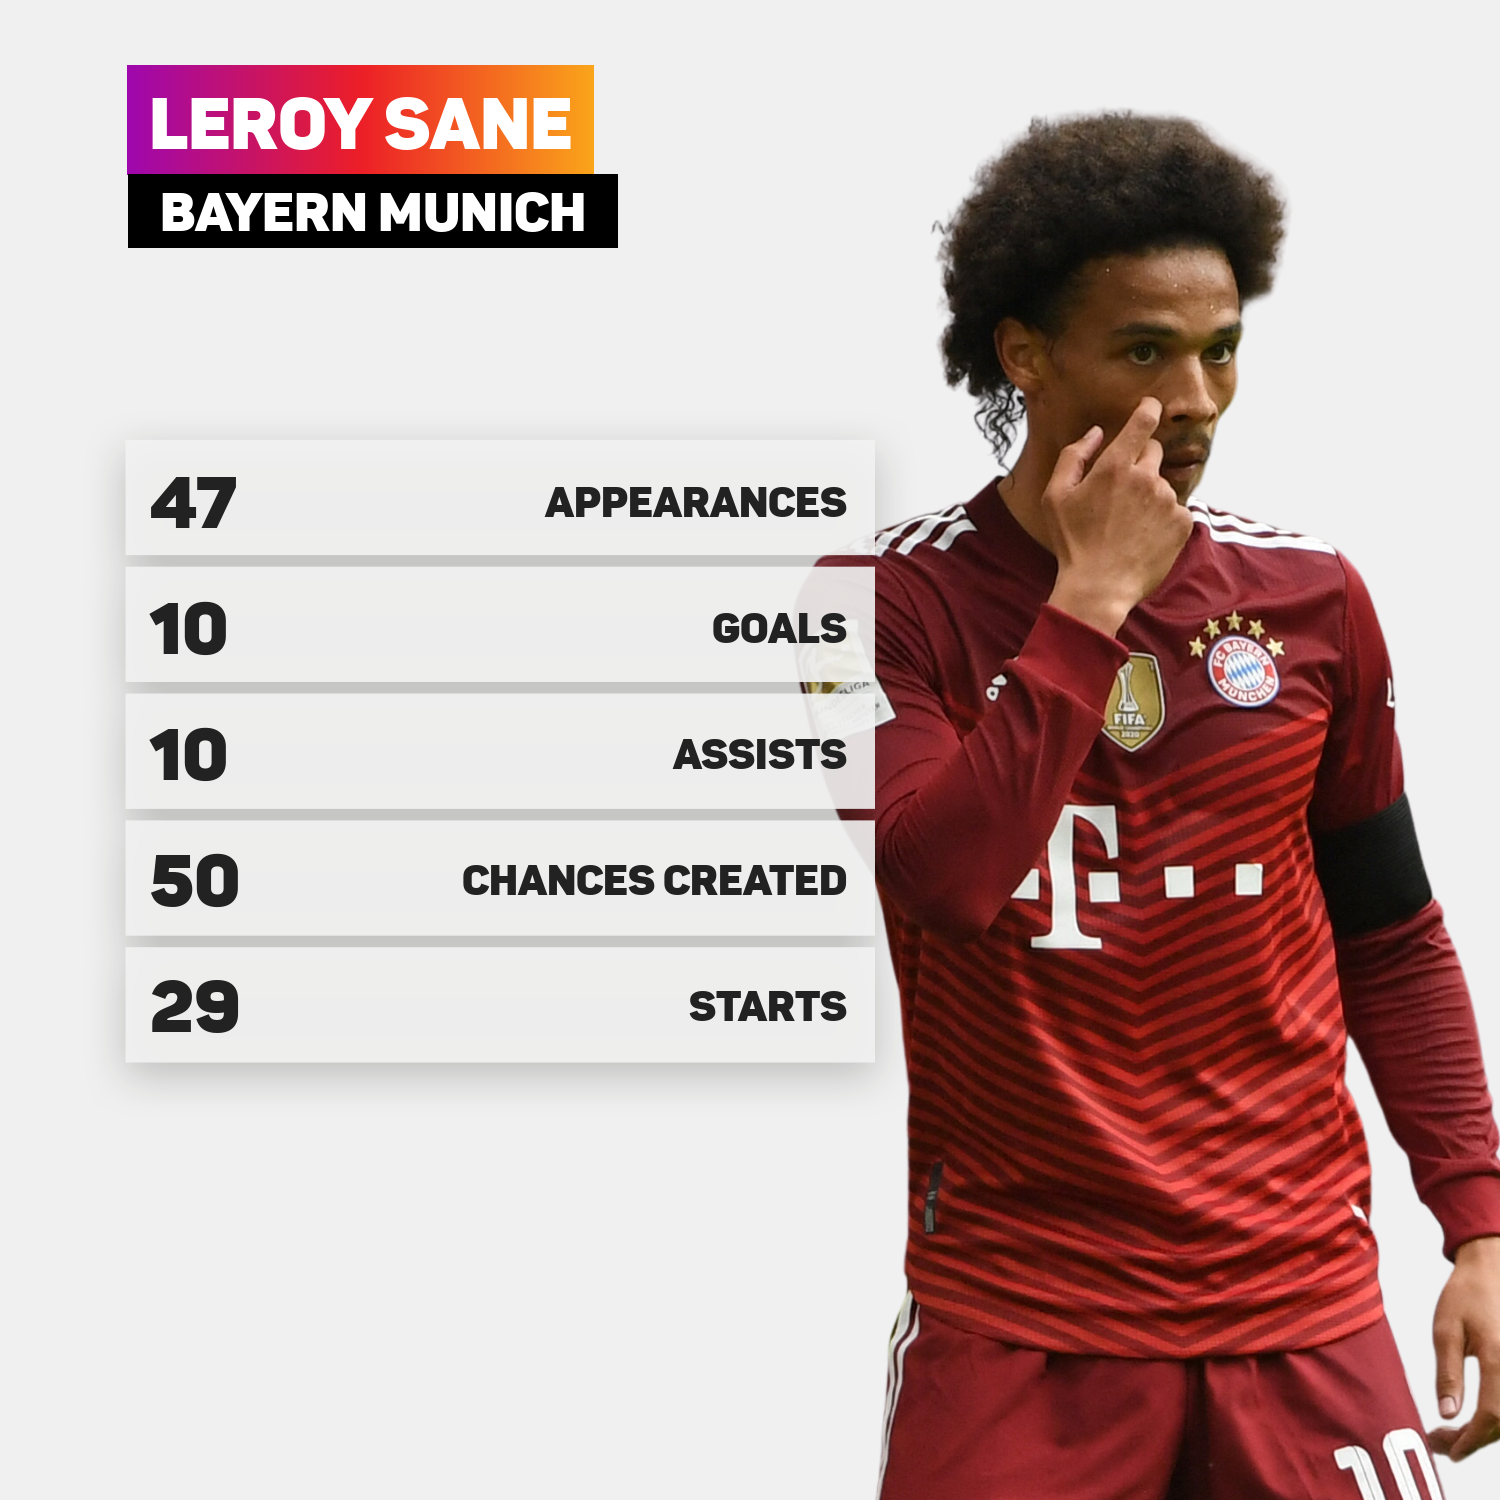 Leroy Sane's numbers at Bayern Munich